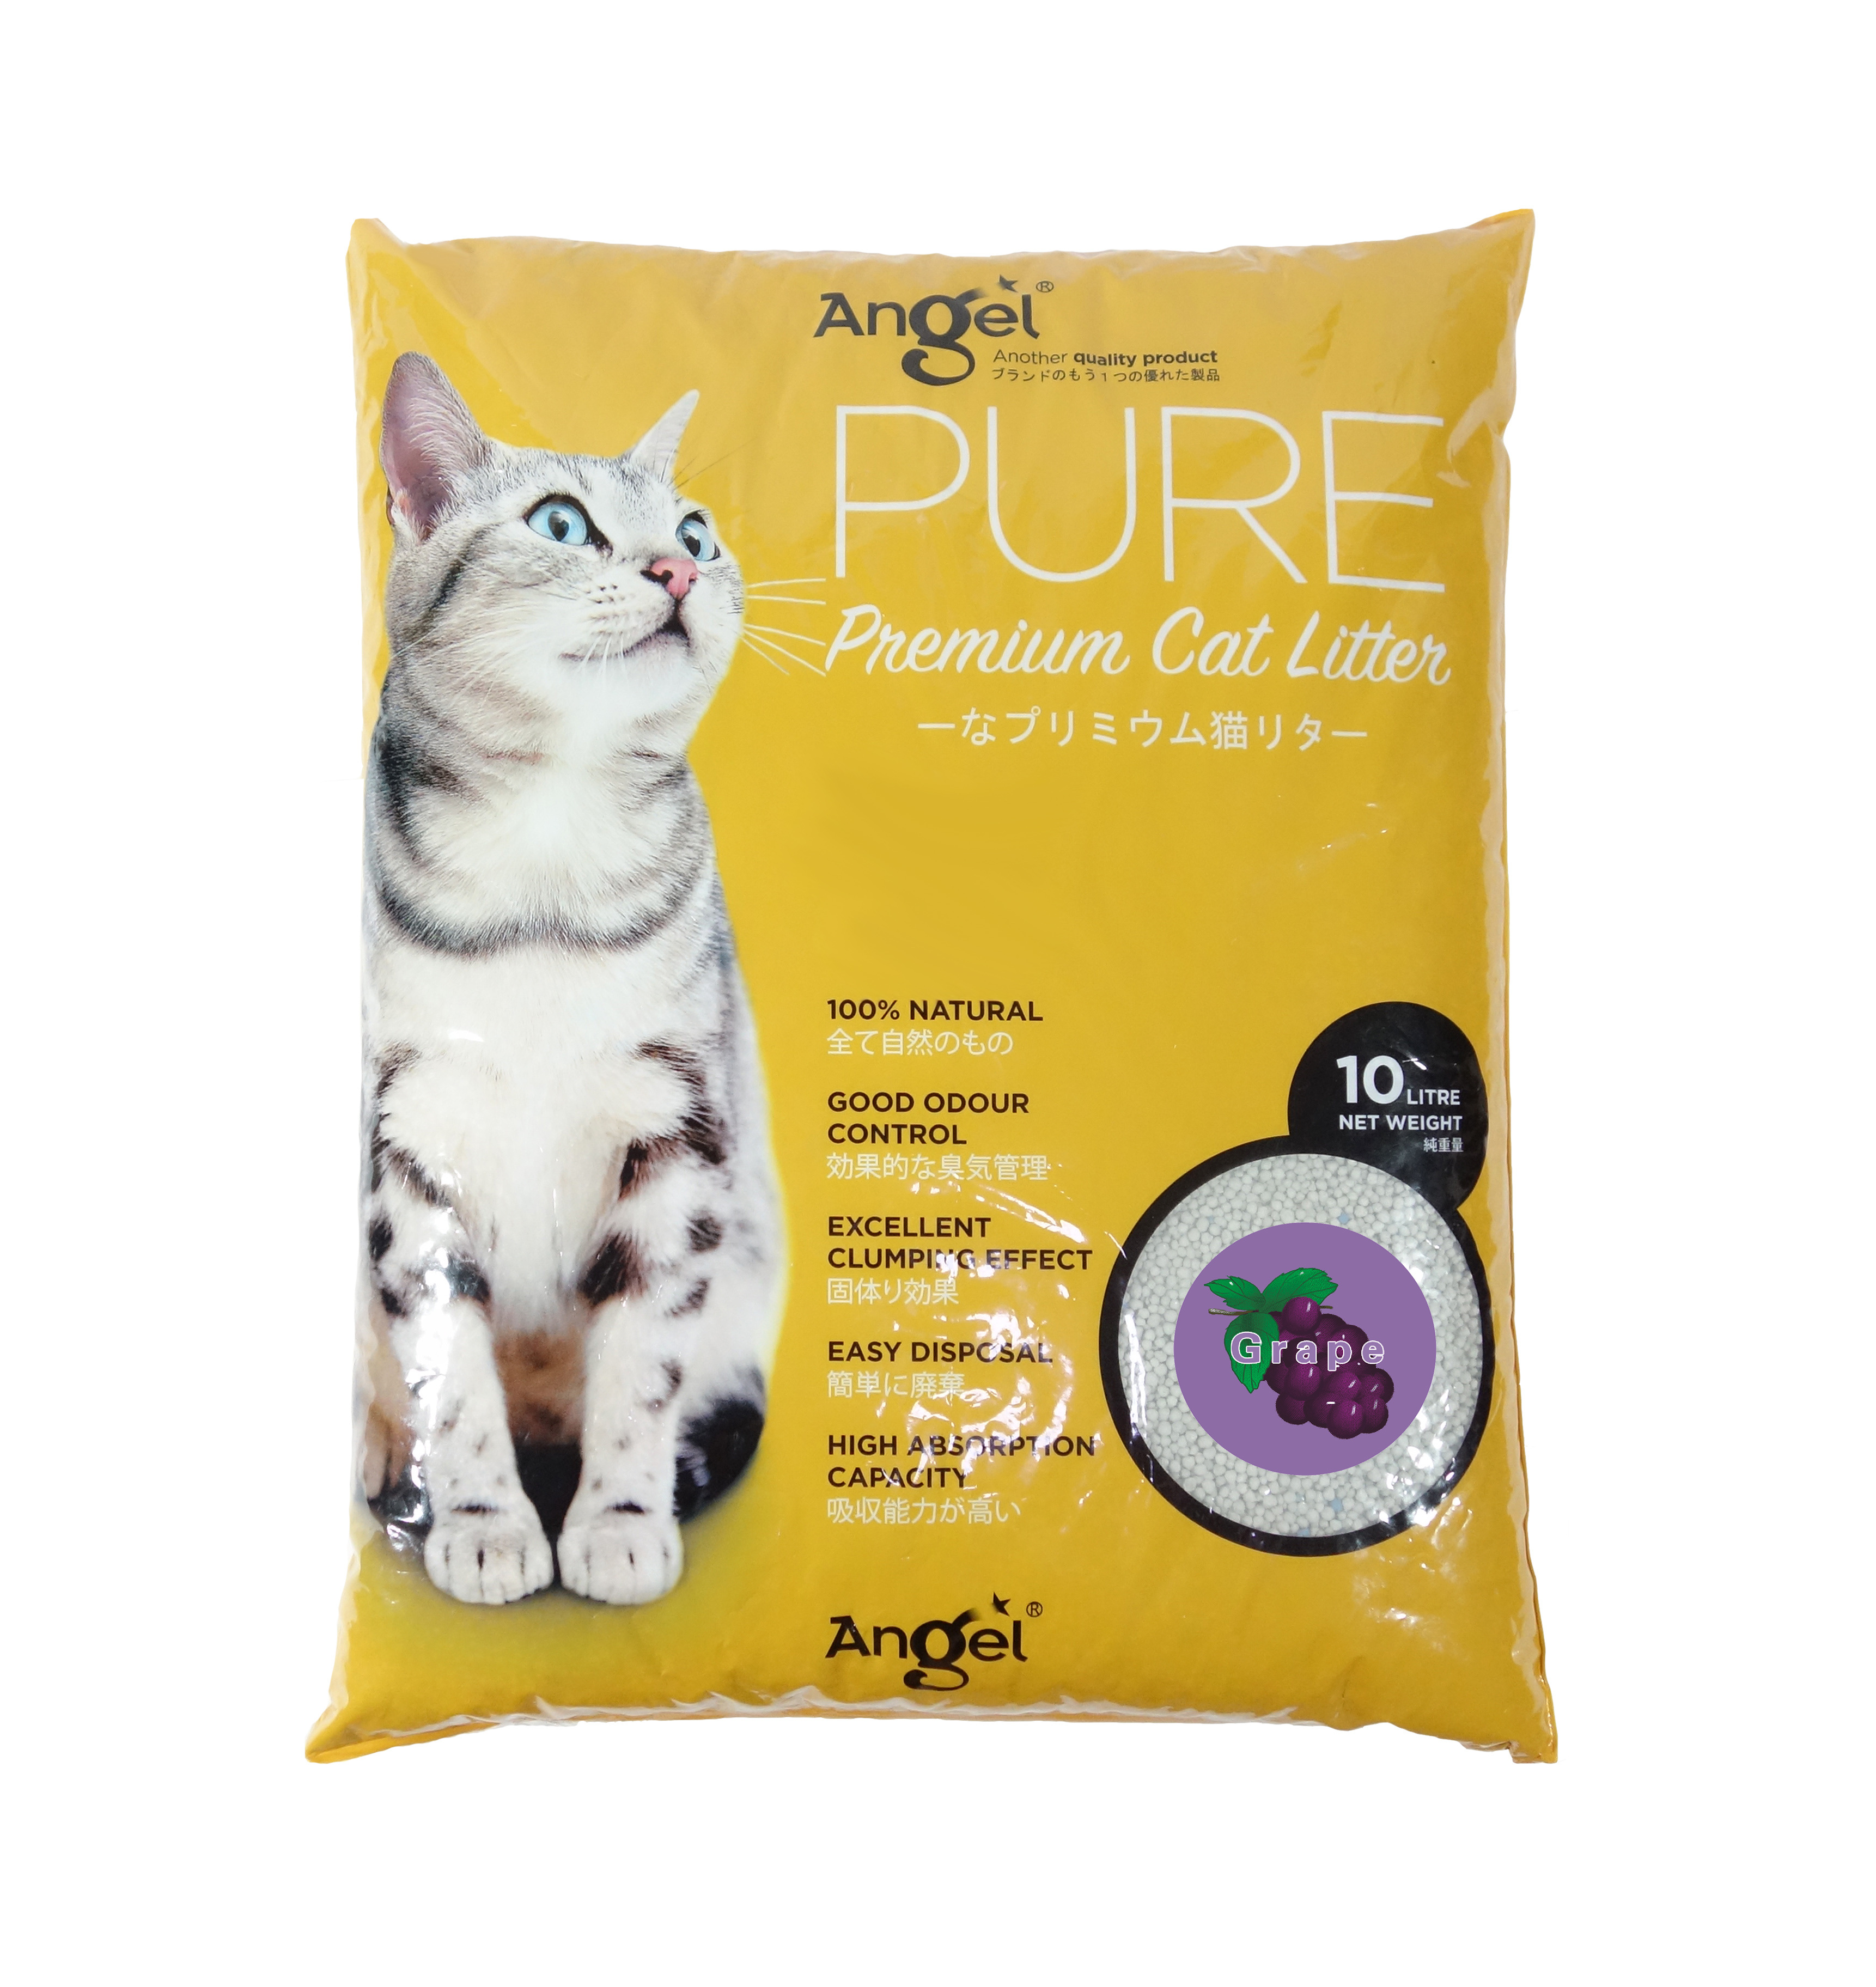 Angel Pure Premium Cat Litter 10L Grape Scented